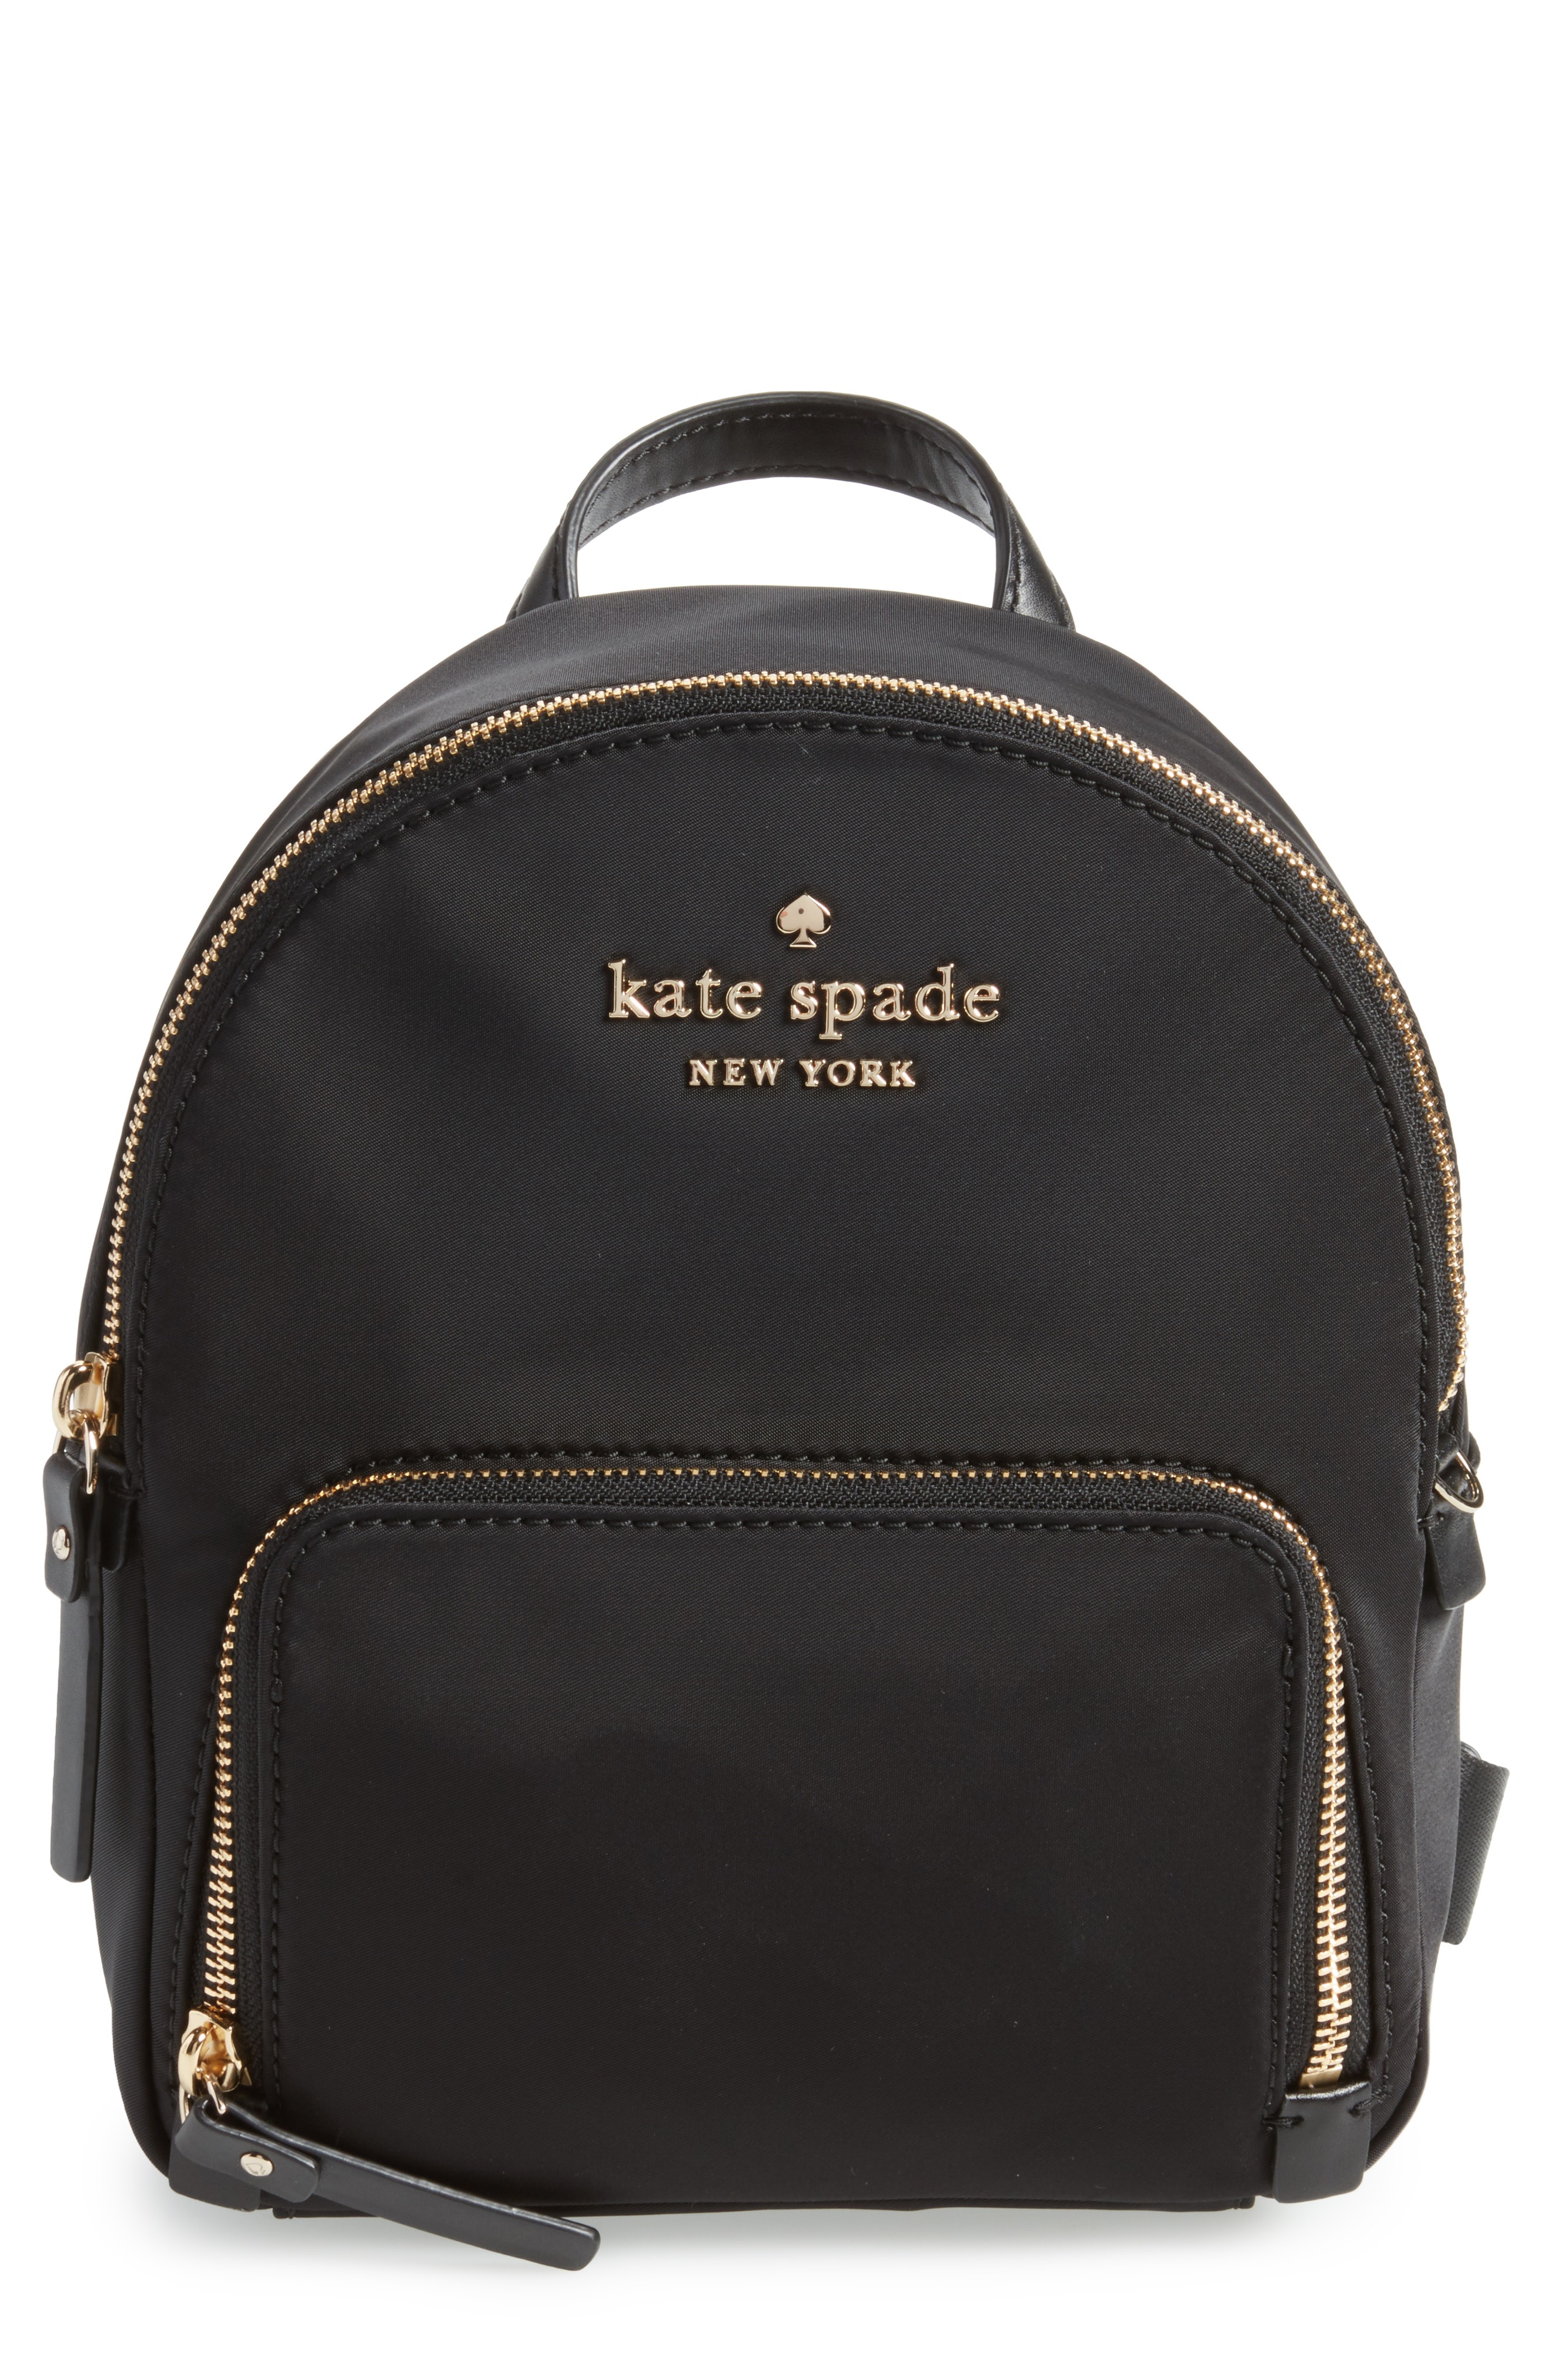 kate spade new york watson lane - small hartley nylon backpack